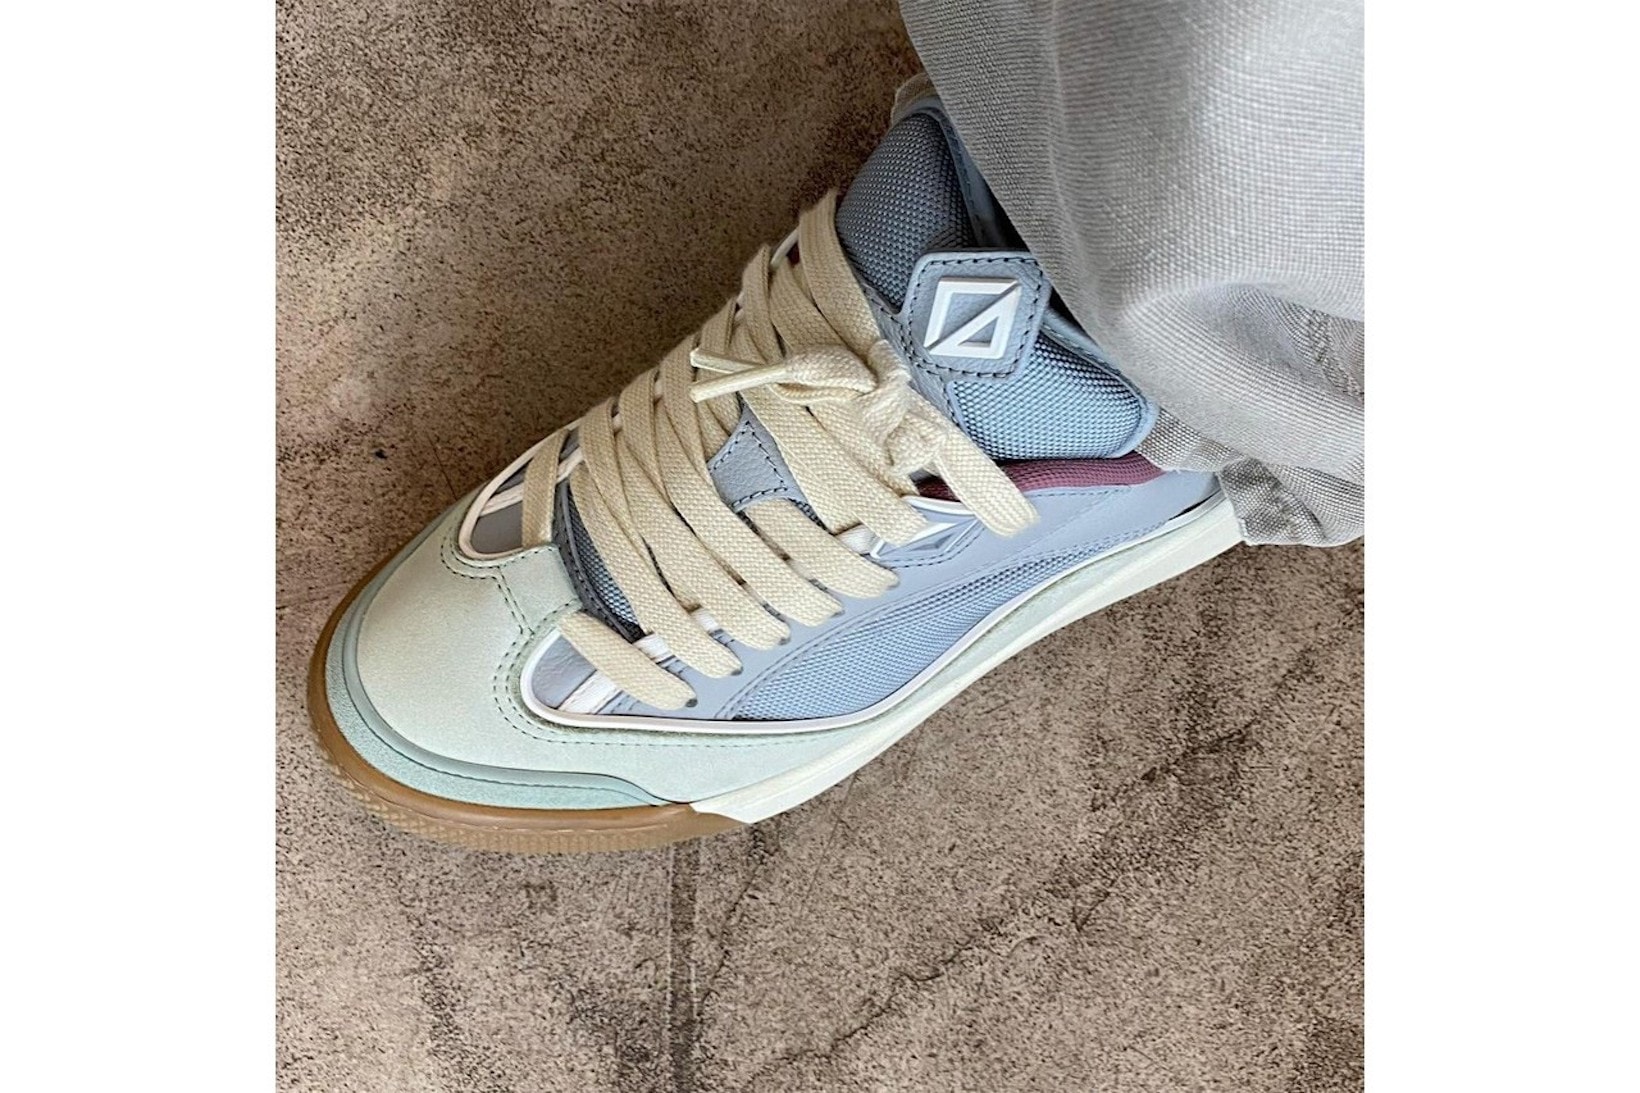 Travis Scott Dior B713 Sneakers Collaboration Footwear Kicks Shoes Blue Mint Maroon Beige